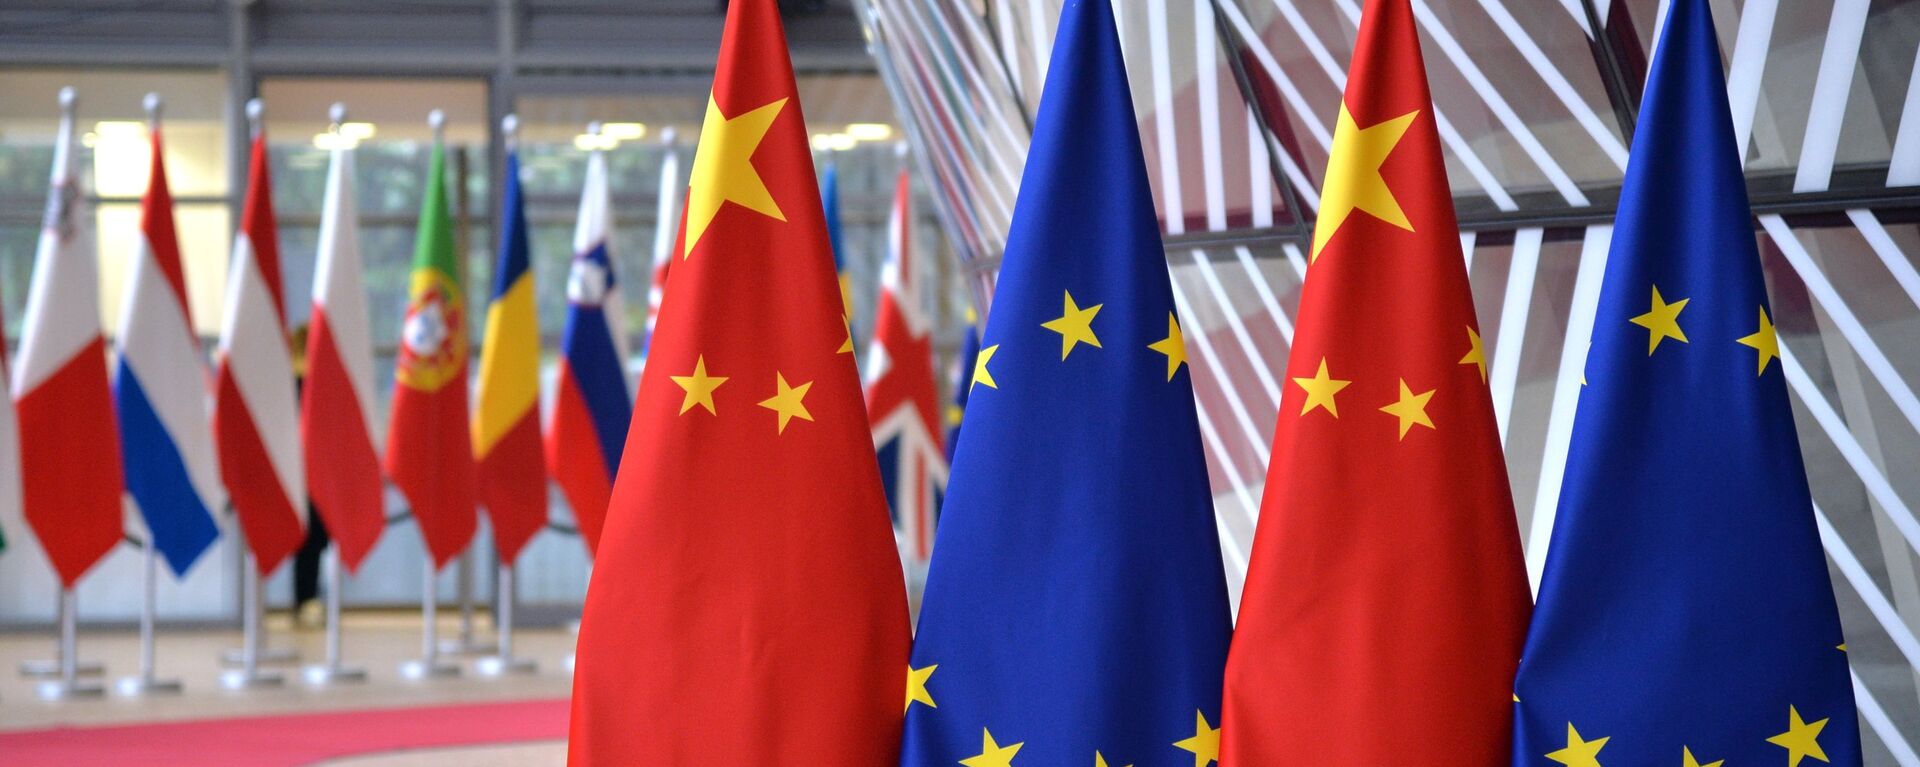 Флаги Европейского союза и государственные флаги КНР на саммите ЕС-КНР в Брюсселе - Sputnik Молдова, 1920, 26.04.2023